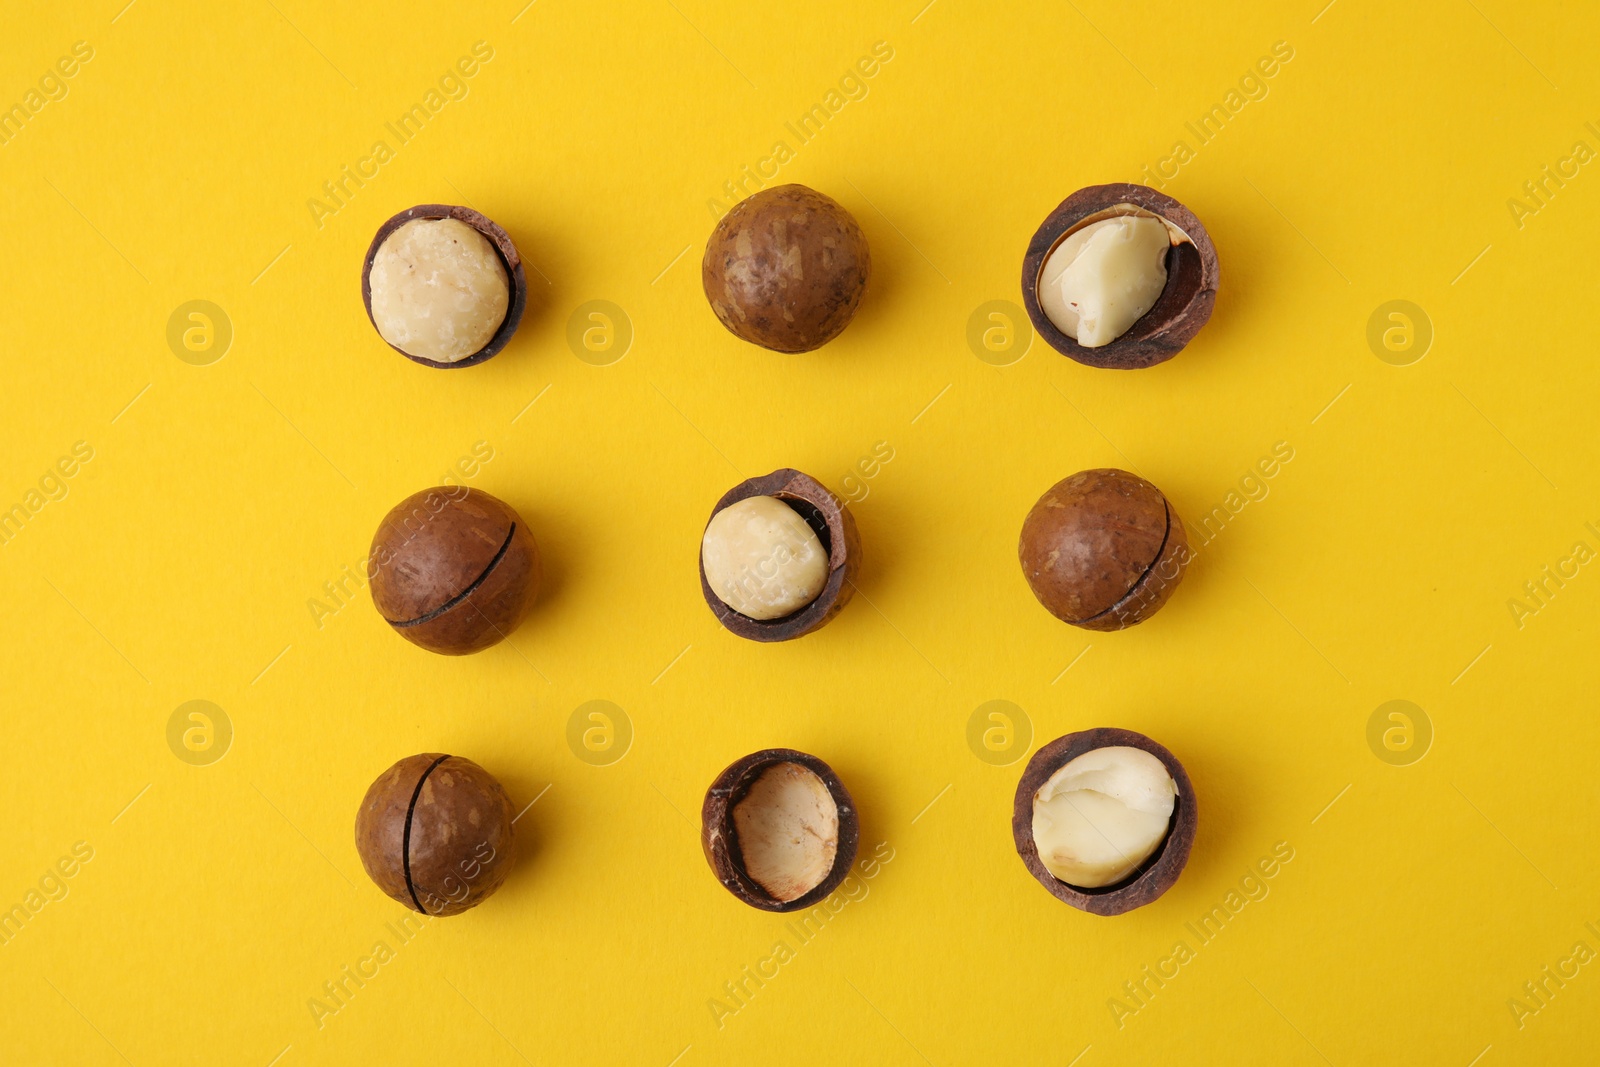 Photo of Tasty Macadamia nuts on yellow background, flat lay